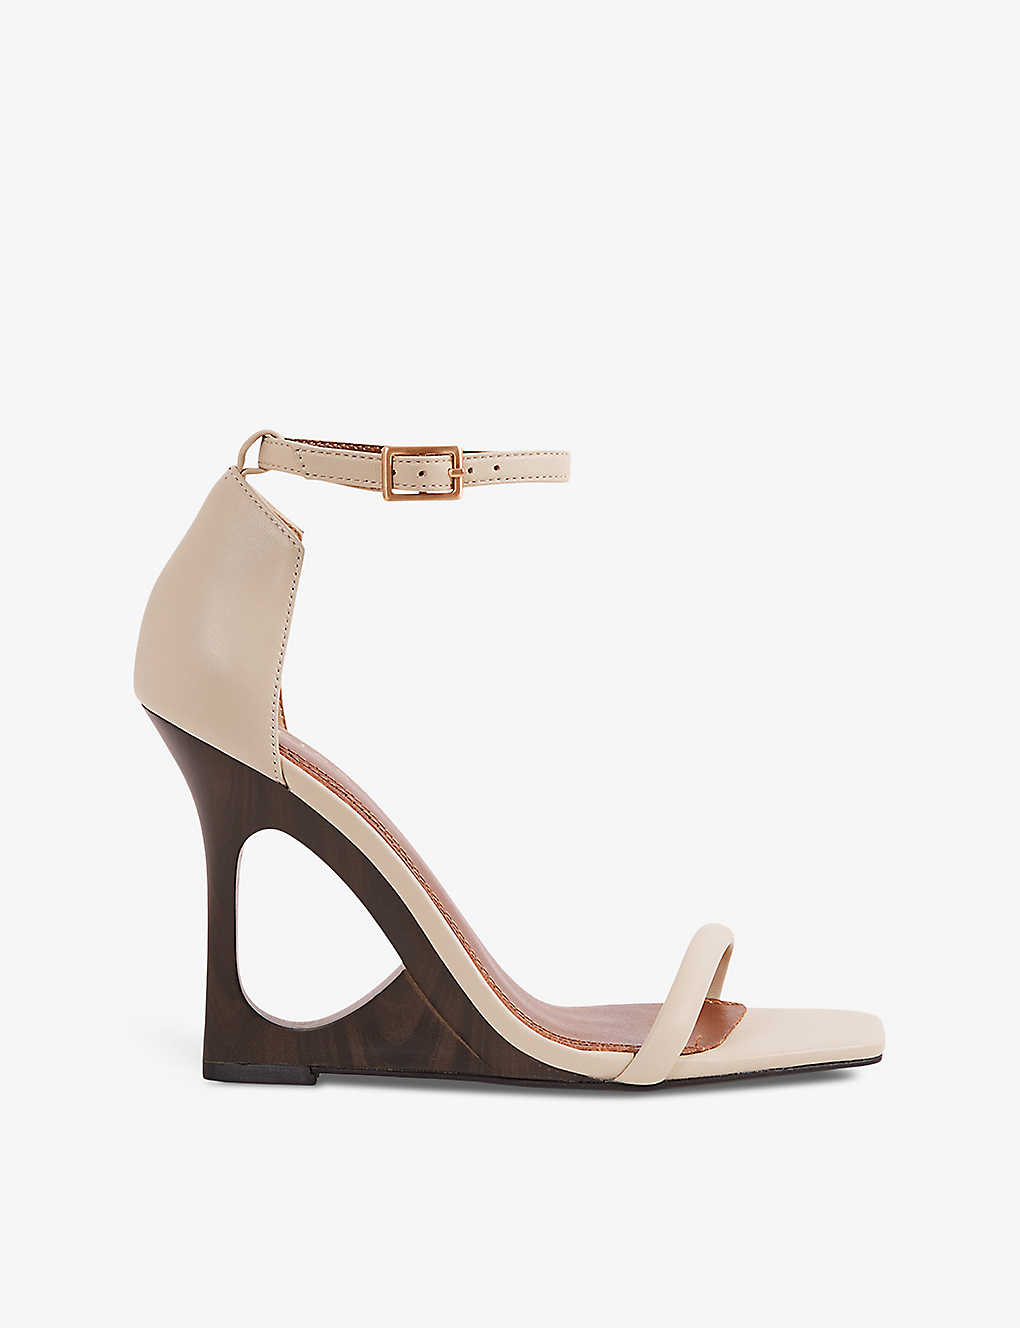 Shop Reiss Women's Off White Cora Wedge-heel Leather Sandals